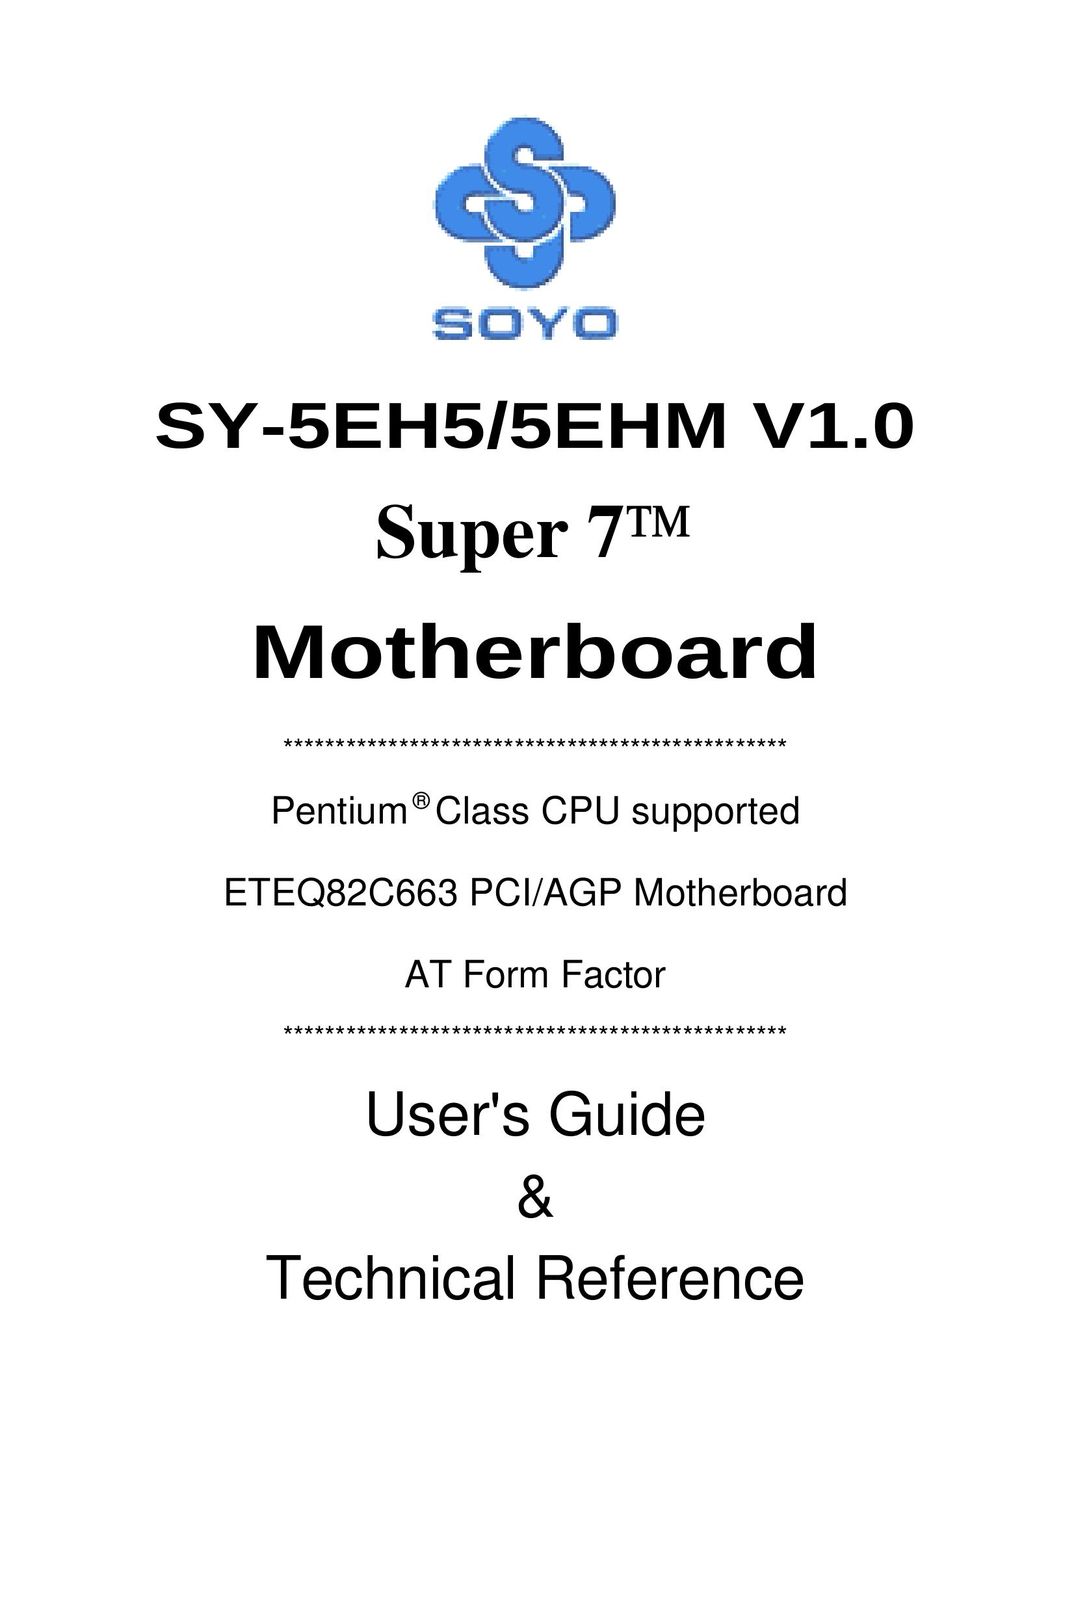 SOYO SY-5EH5 Computer Hardware User Manual